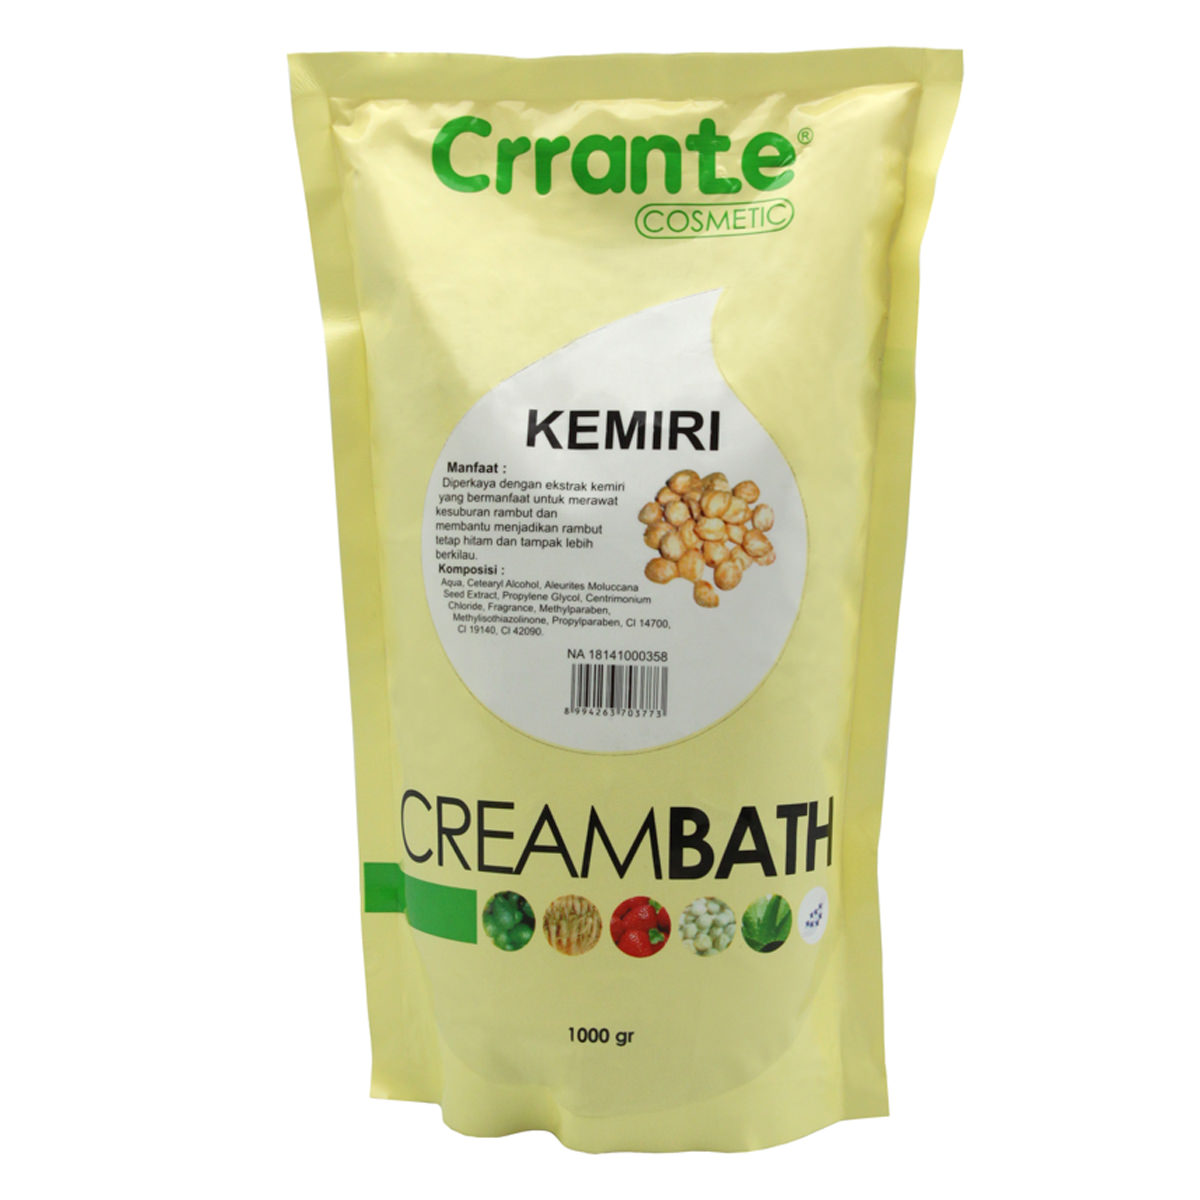 Crrante-Creambath-Kemiri-Refill-high-sfw(1)